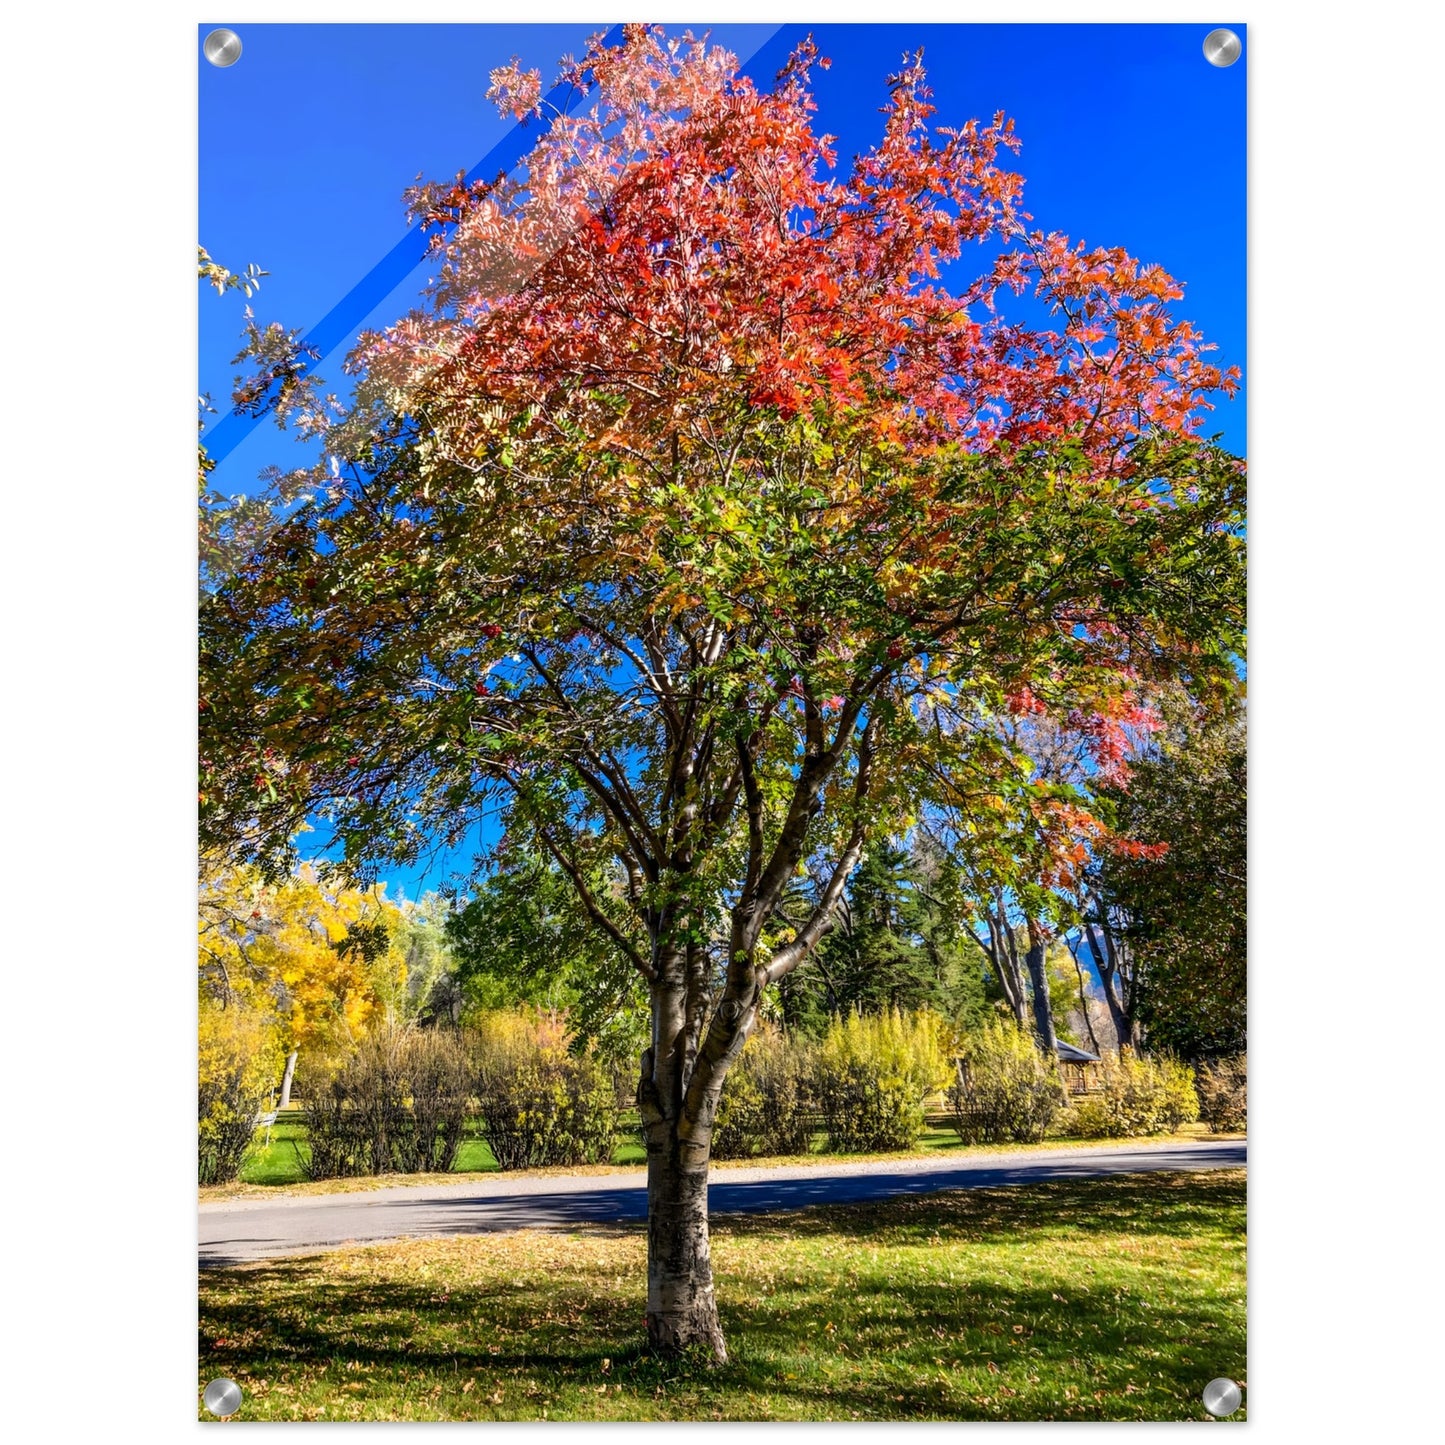 Prism Amelanchier: An Autumn Amelanchier Tree in Montana Acrylic Print. Original Photography by James Bonner.